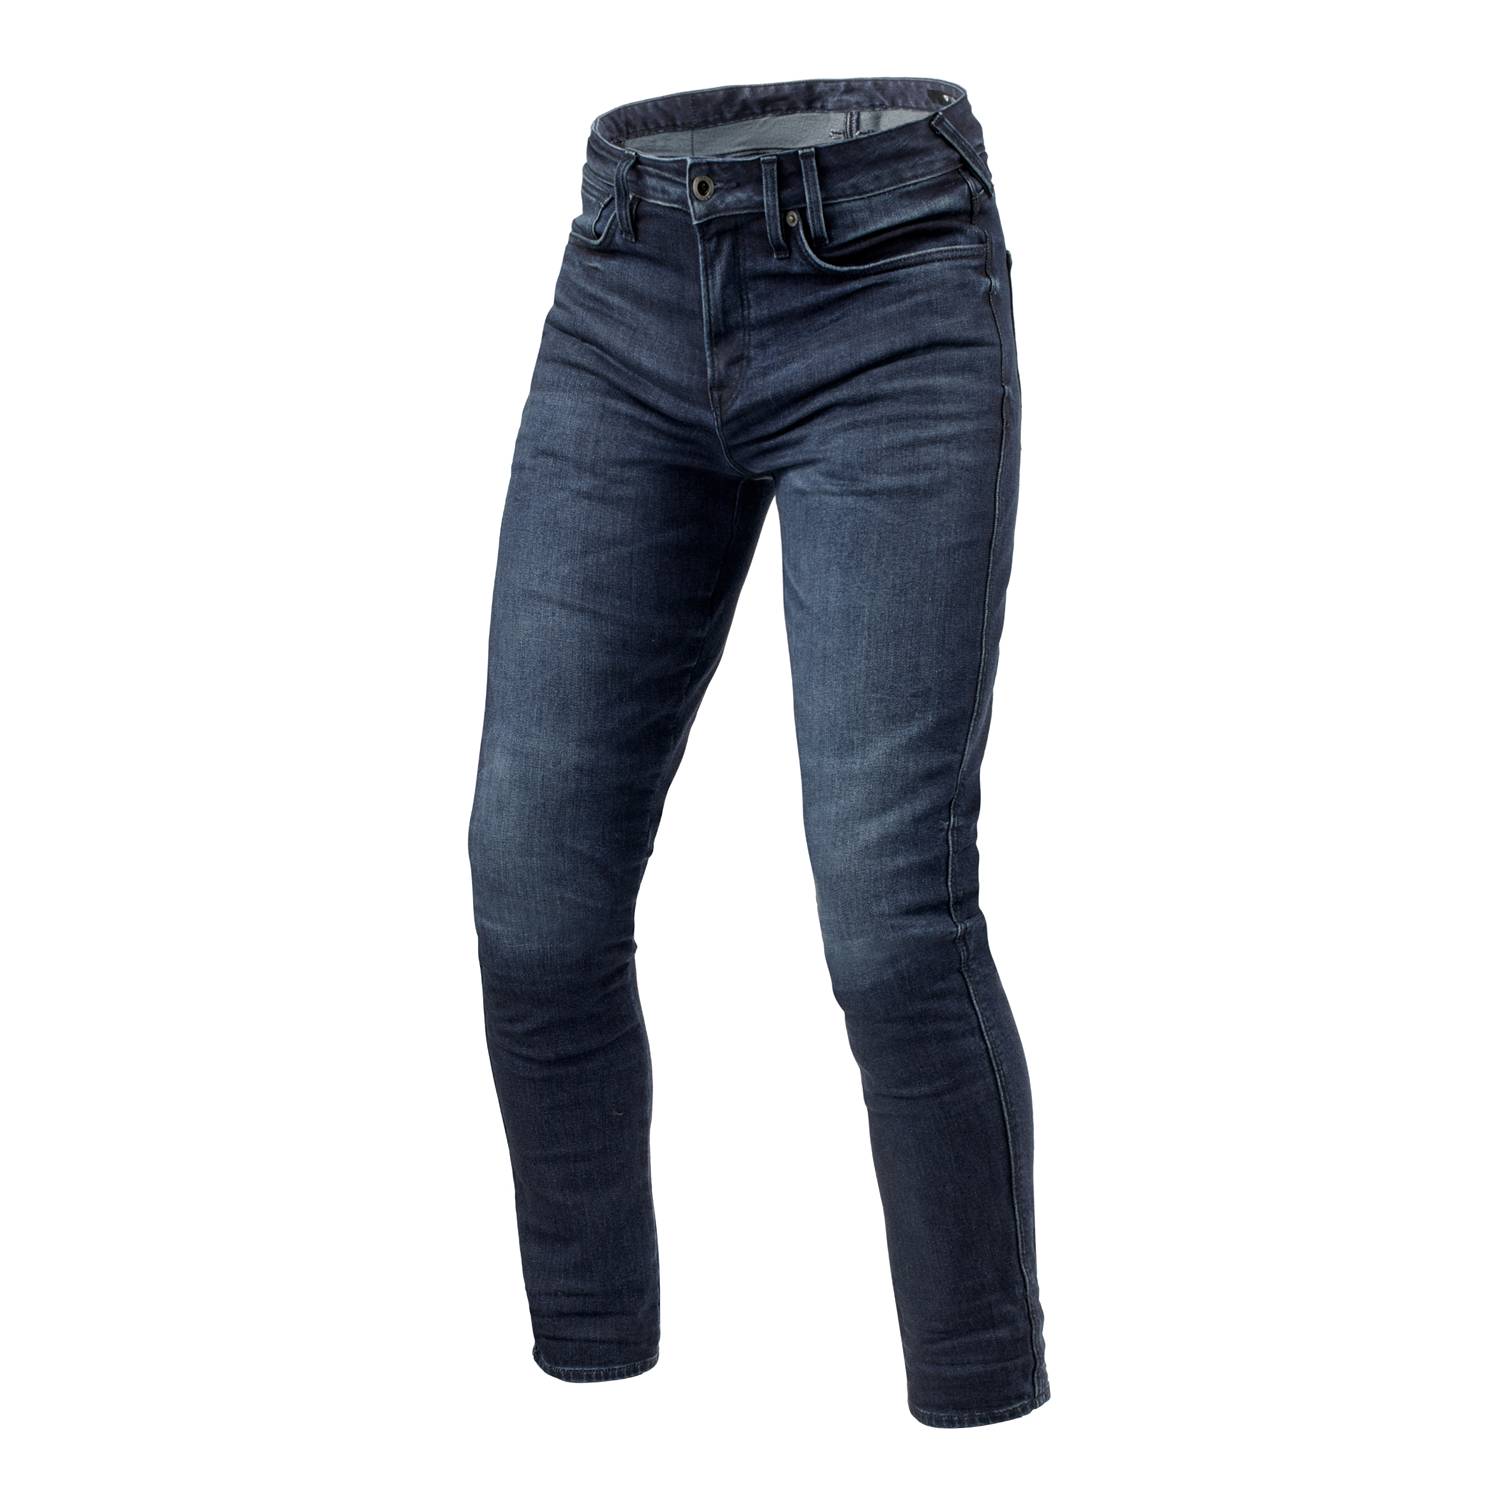 Image of REV'IT! Jeans Carlin SK Dark Blue Used L32 Motorcycle Jeans Talla L32/W30